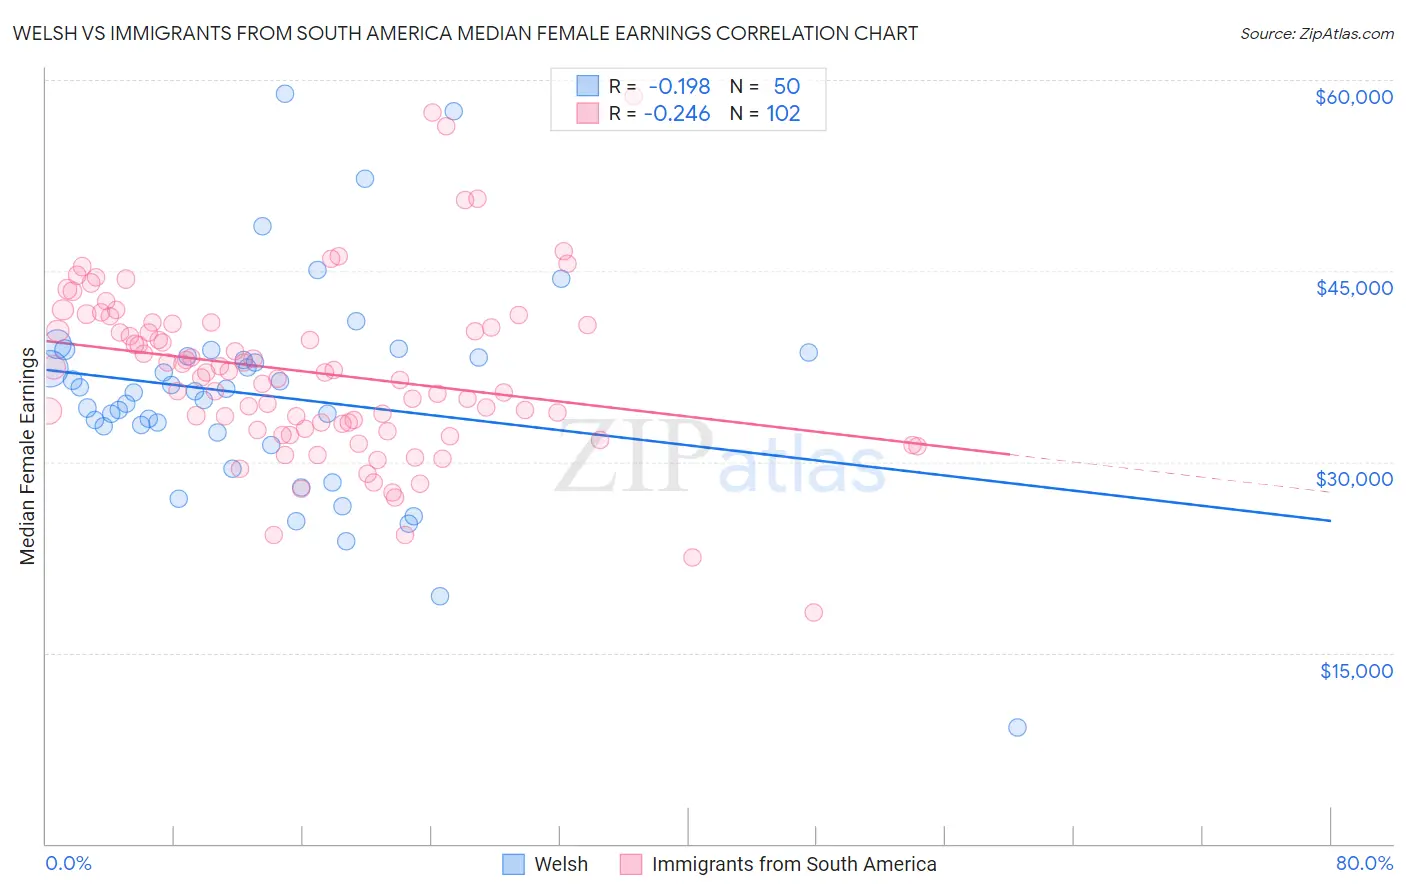 Welsh vs Immigrants from South America Median Female Earnings